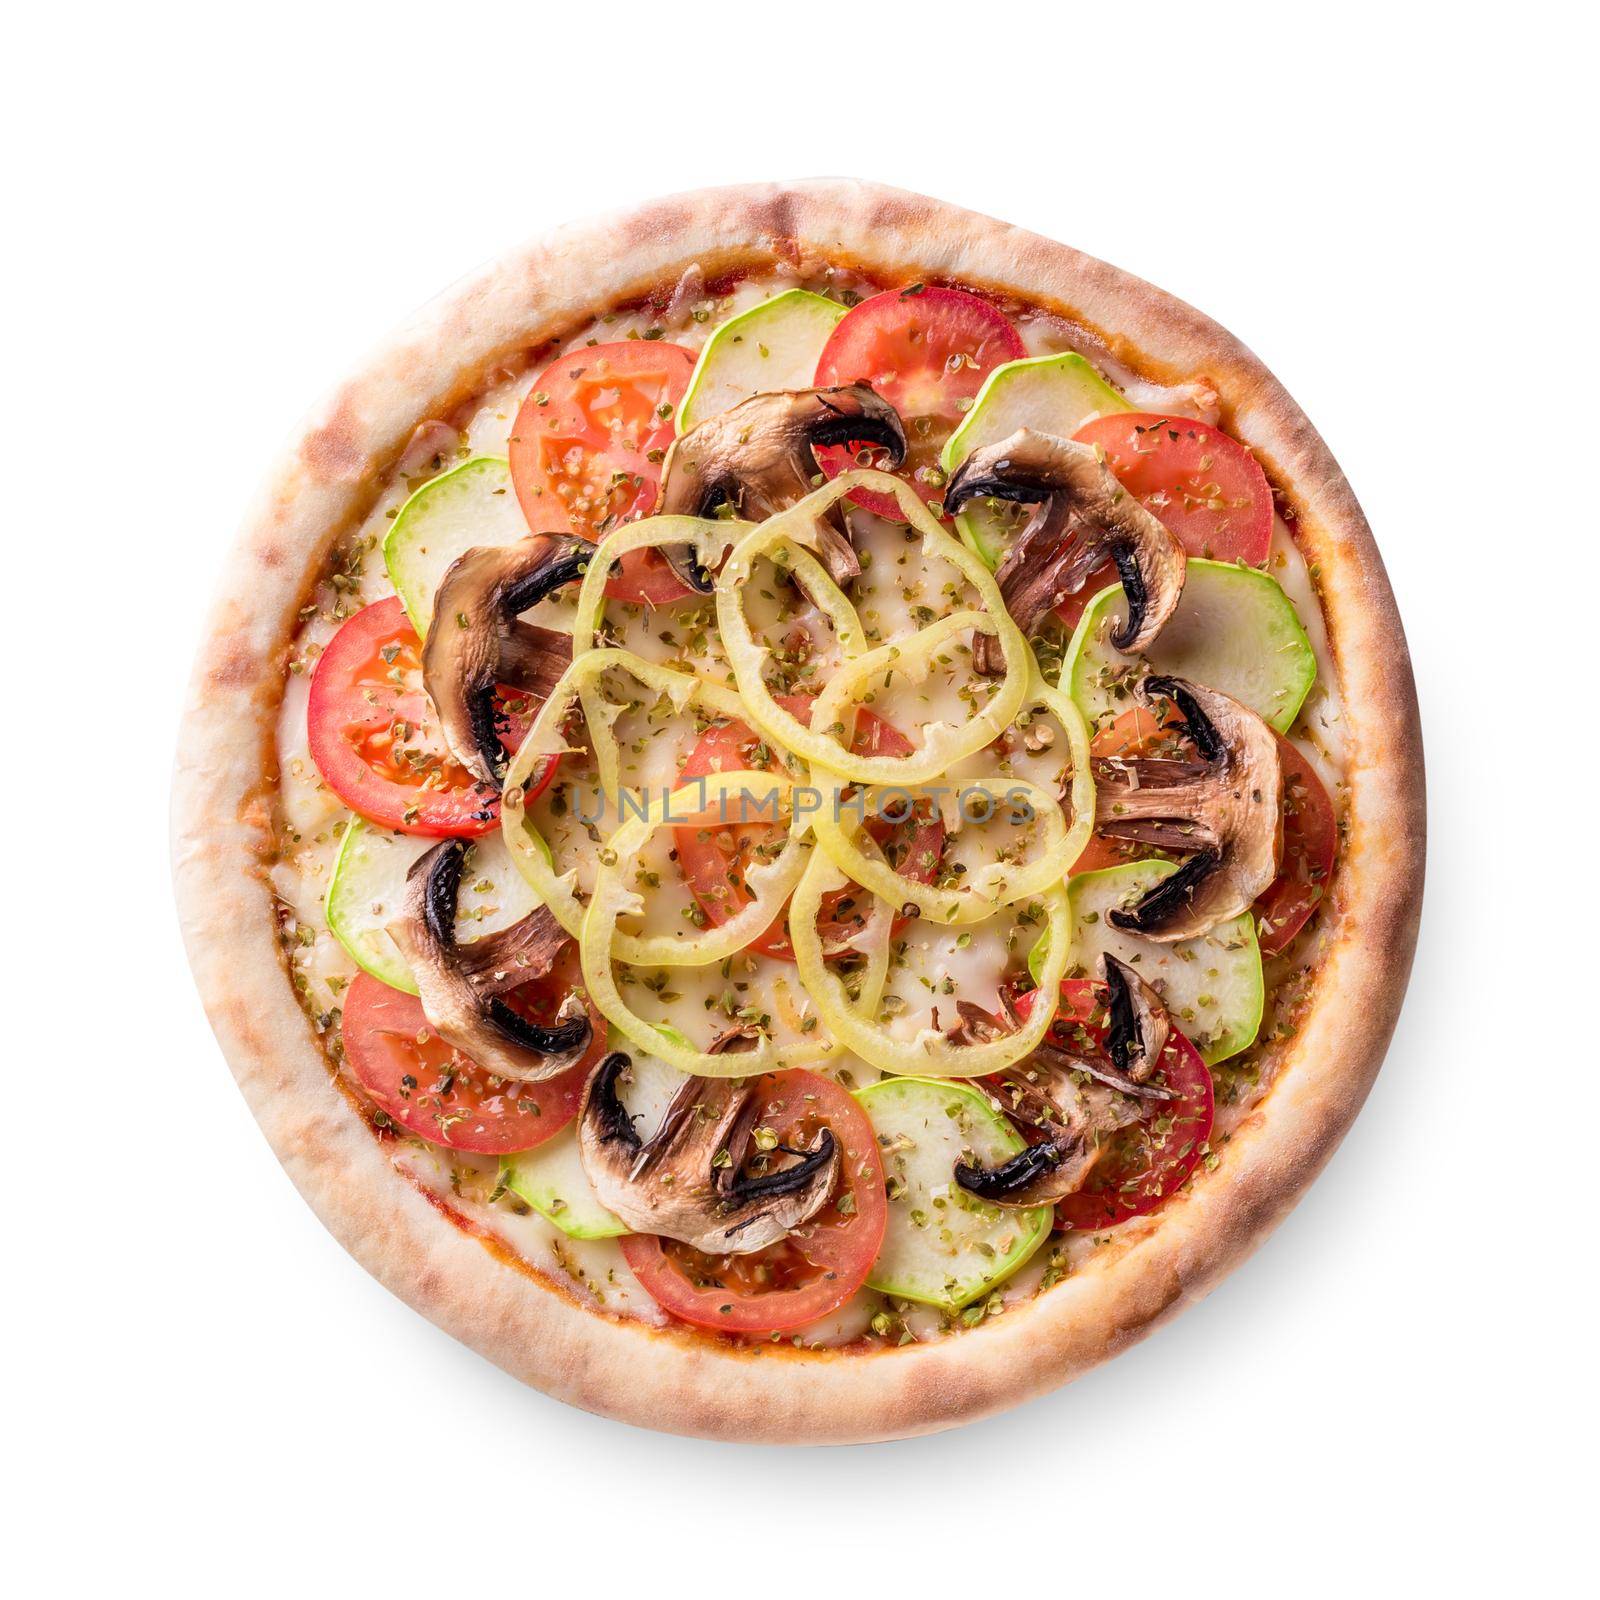 Mushroom pizza vegetarian on white background isolated by nazarovsergey